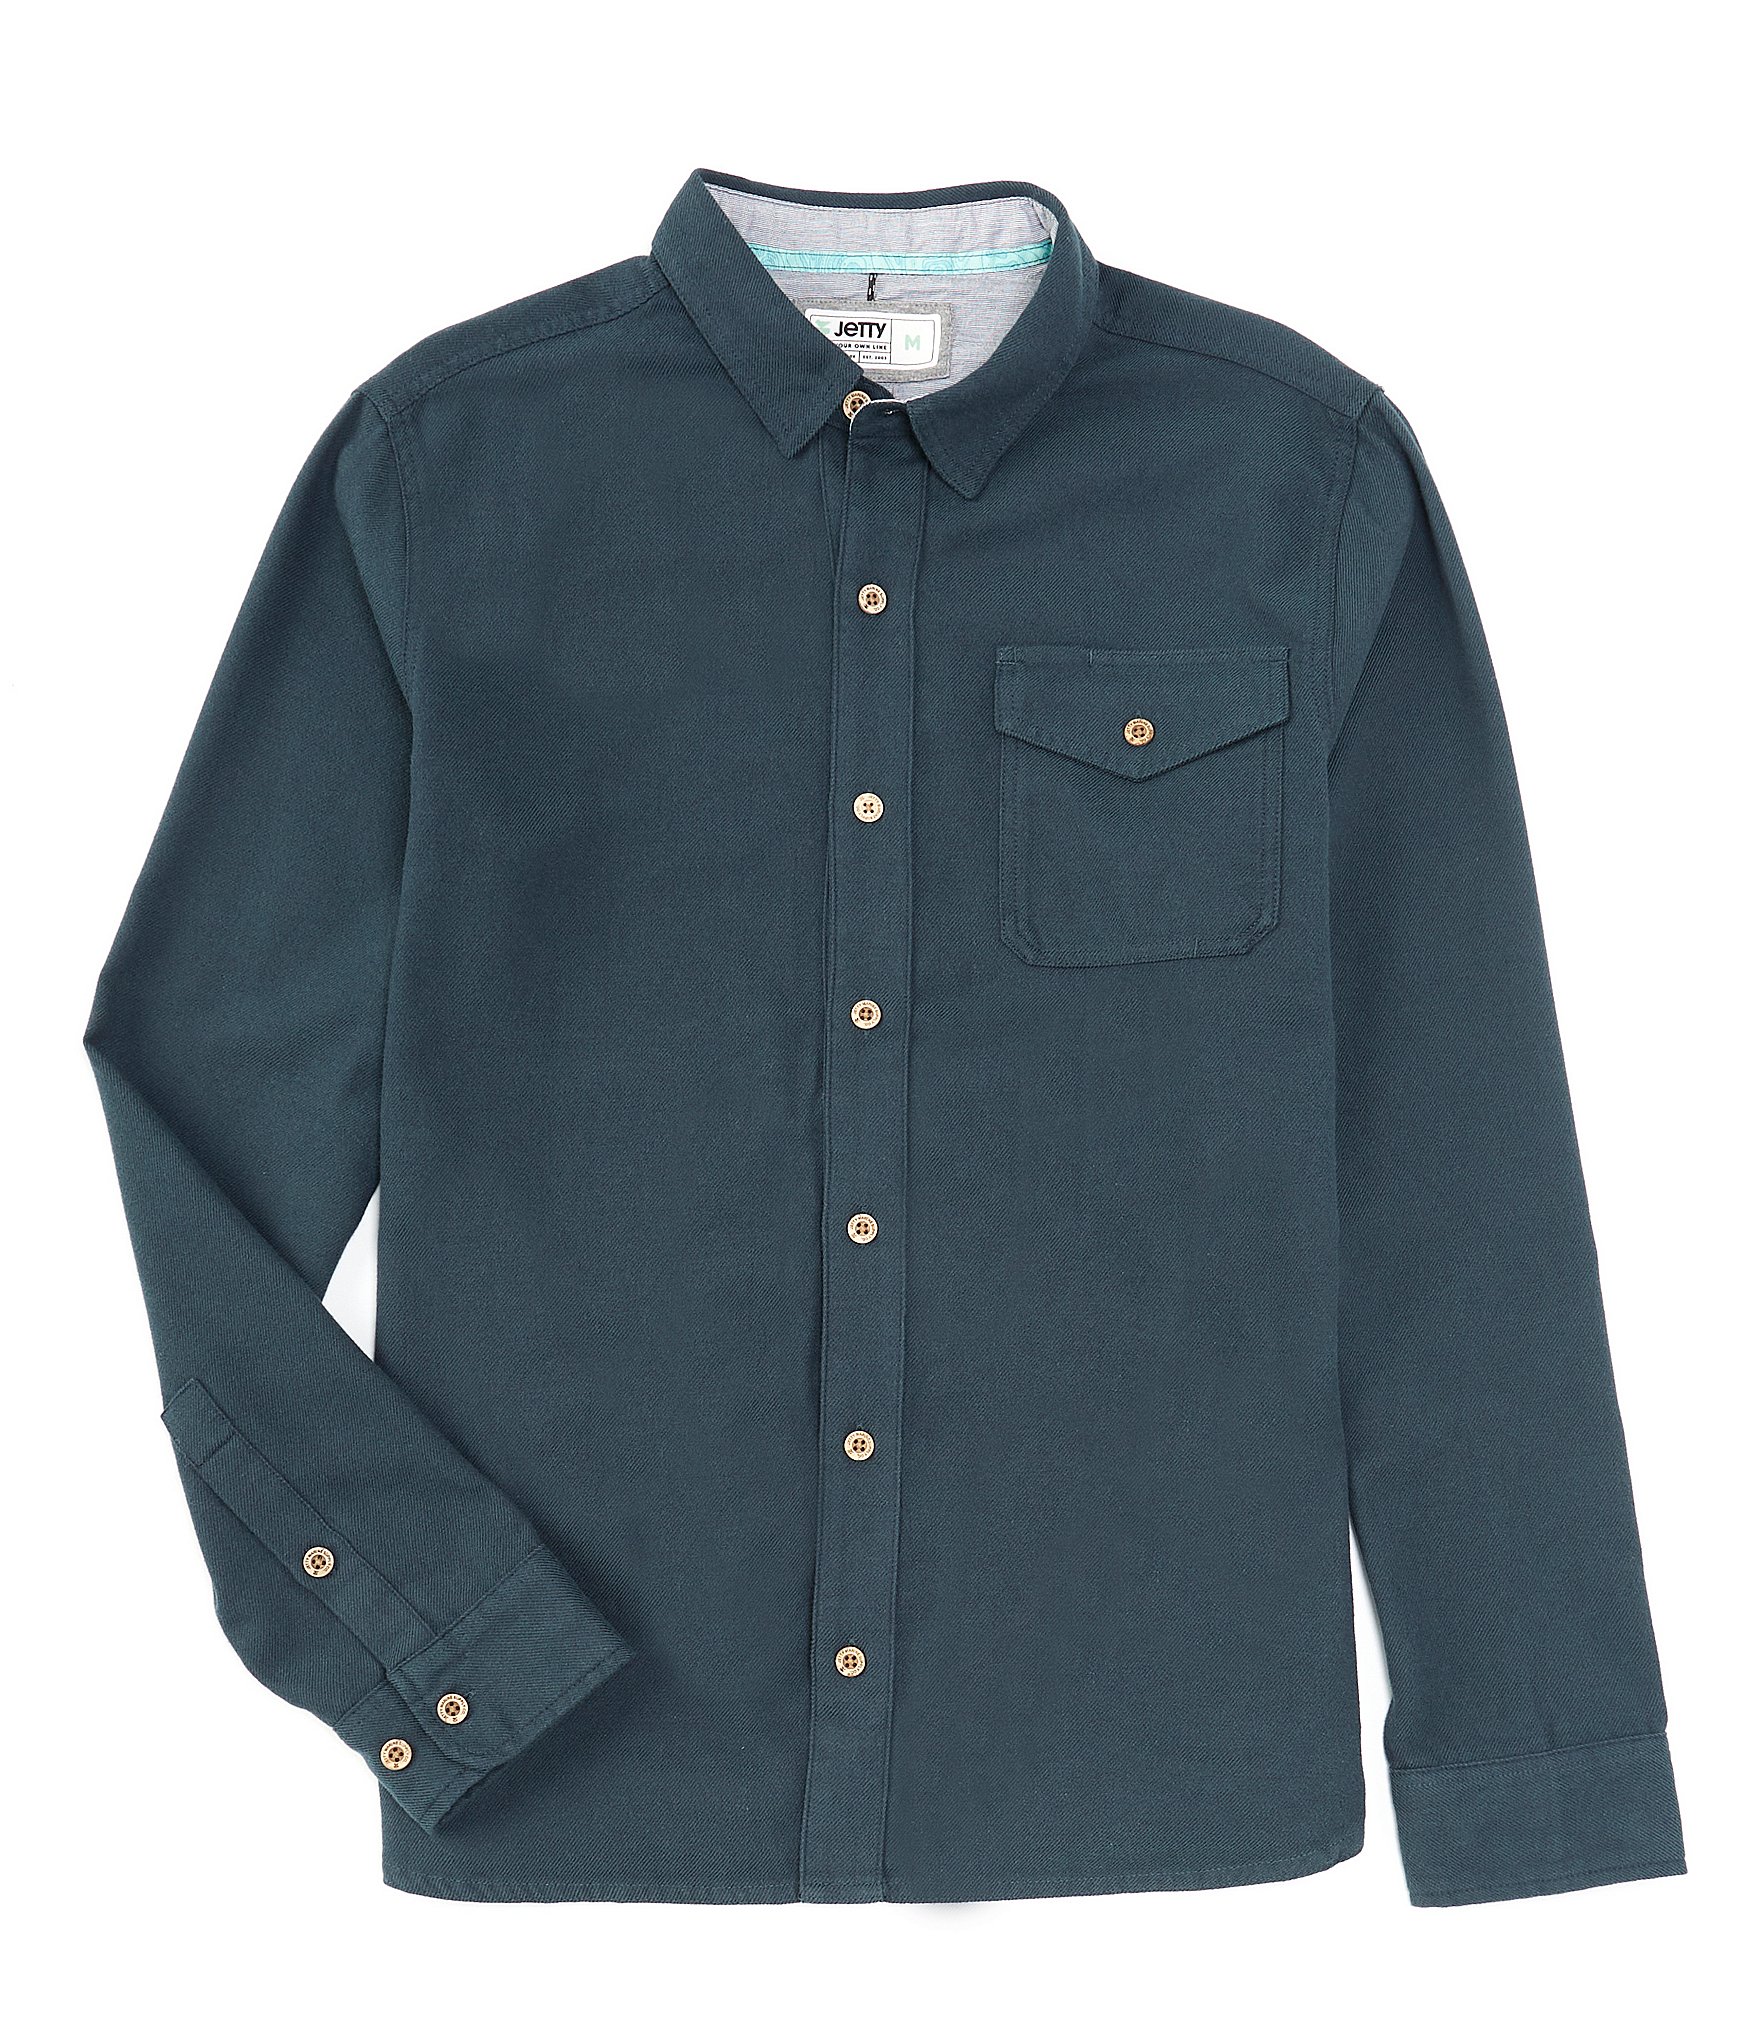 JETTY Essex Oyster Solid Twill Long Sleeve Woven Shirt | Dillard's